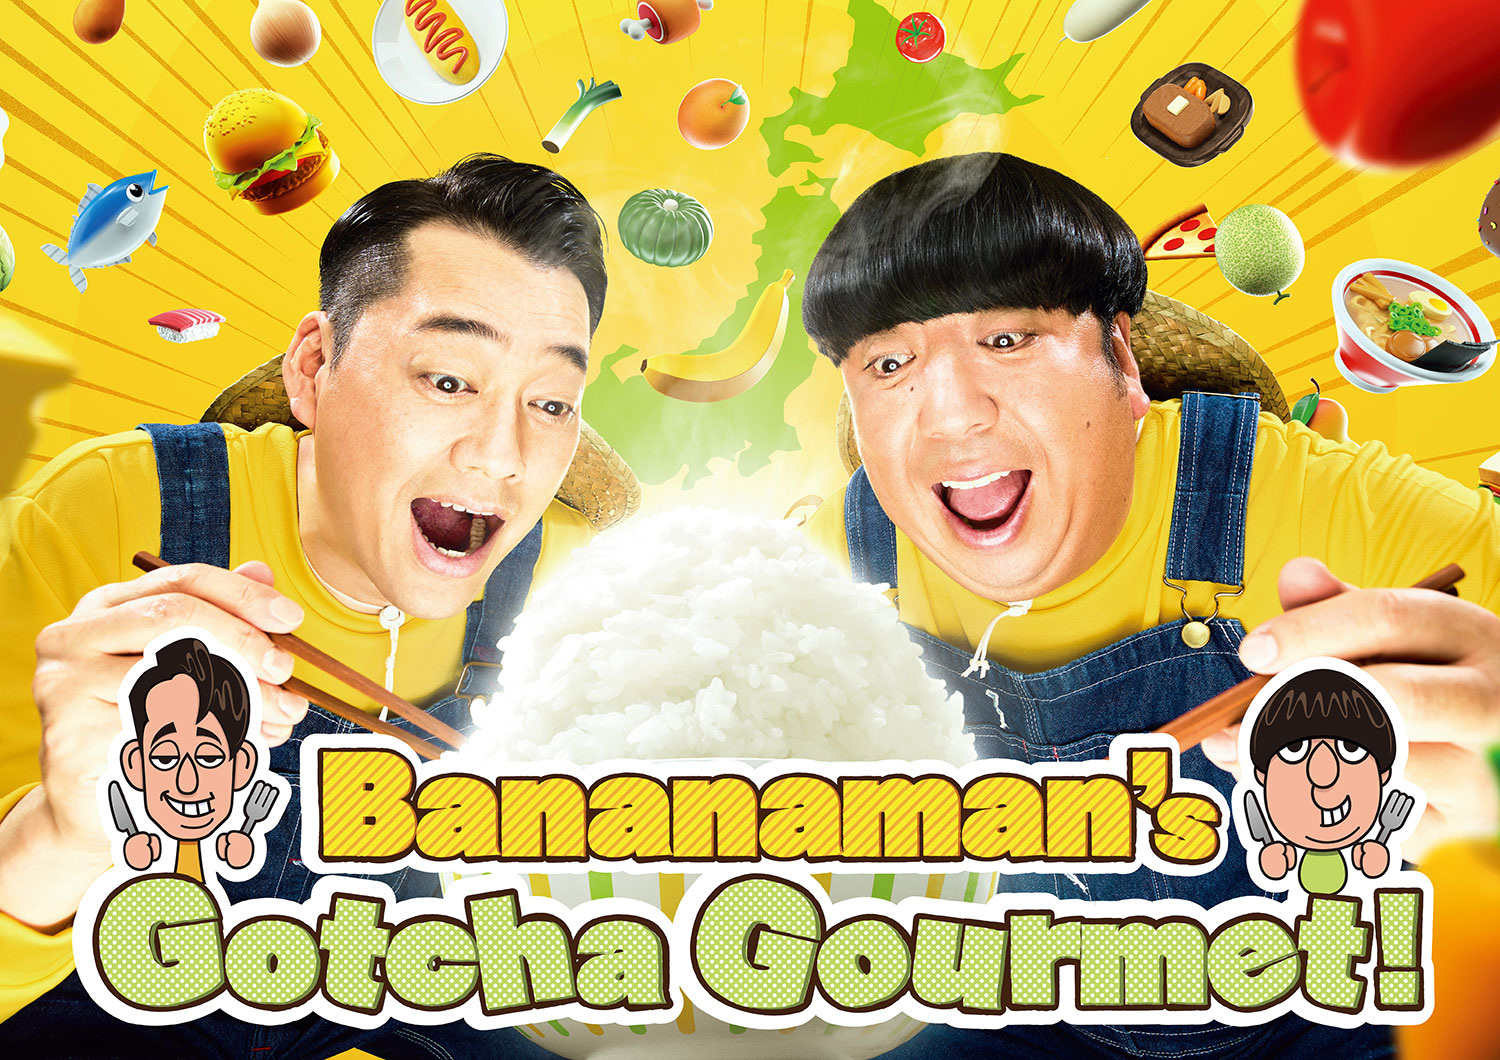 Bananaman’s Gotcha Gourmet!,バナナマンのせっかくグルメ!!,바나나맨의 제대로 구르메!!,香蕉男的全國美食秀